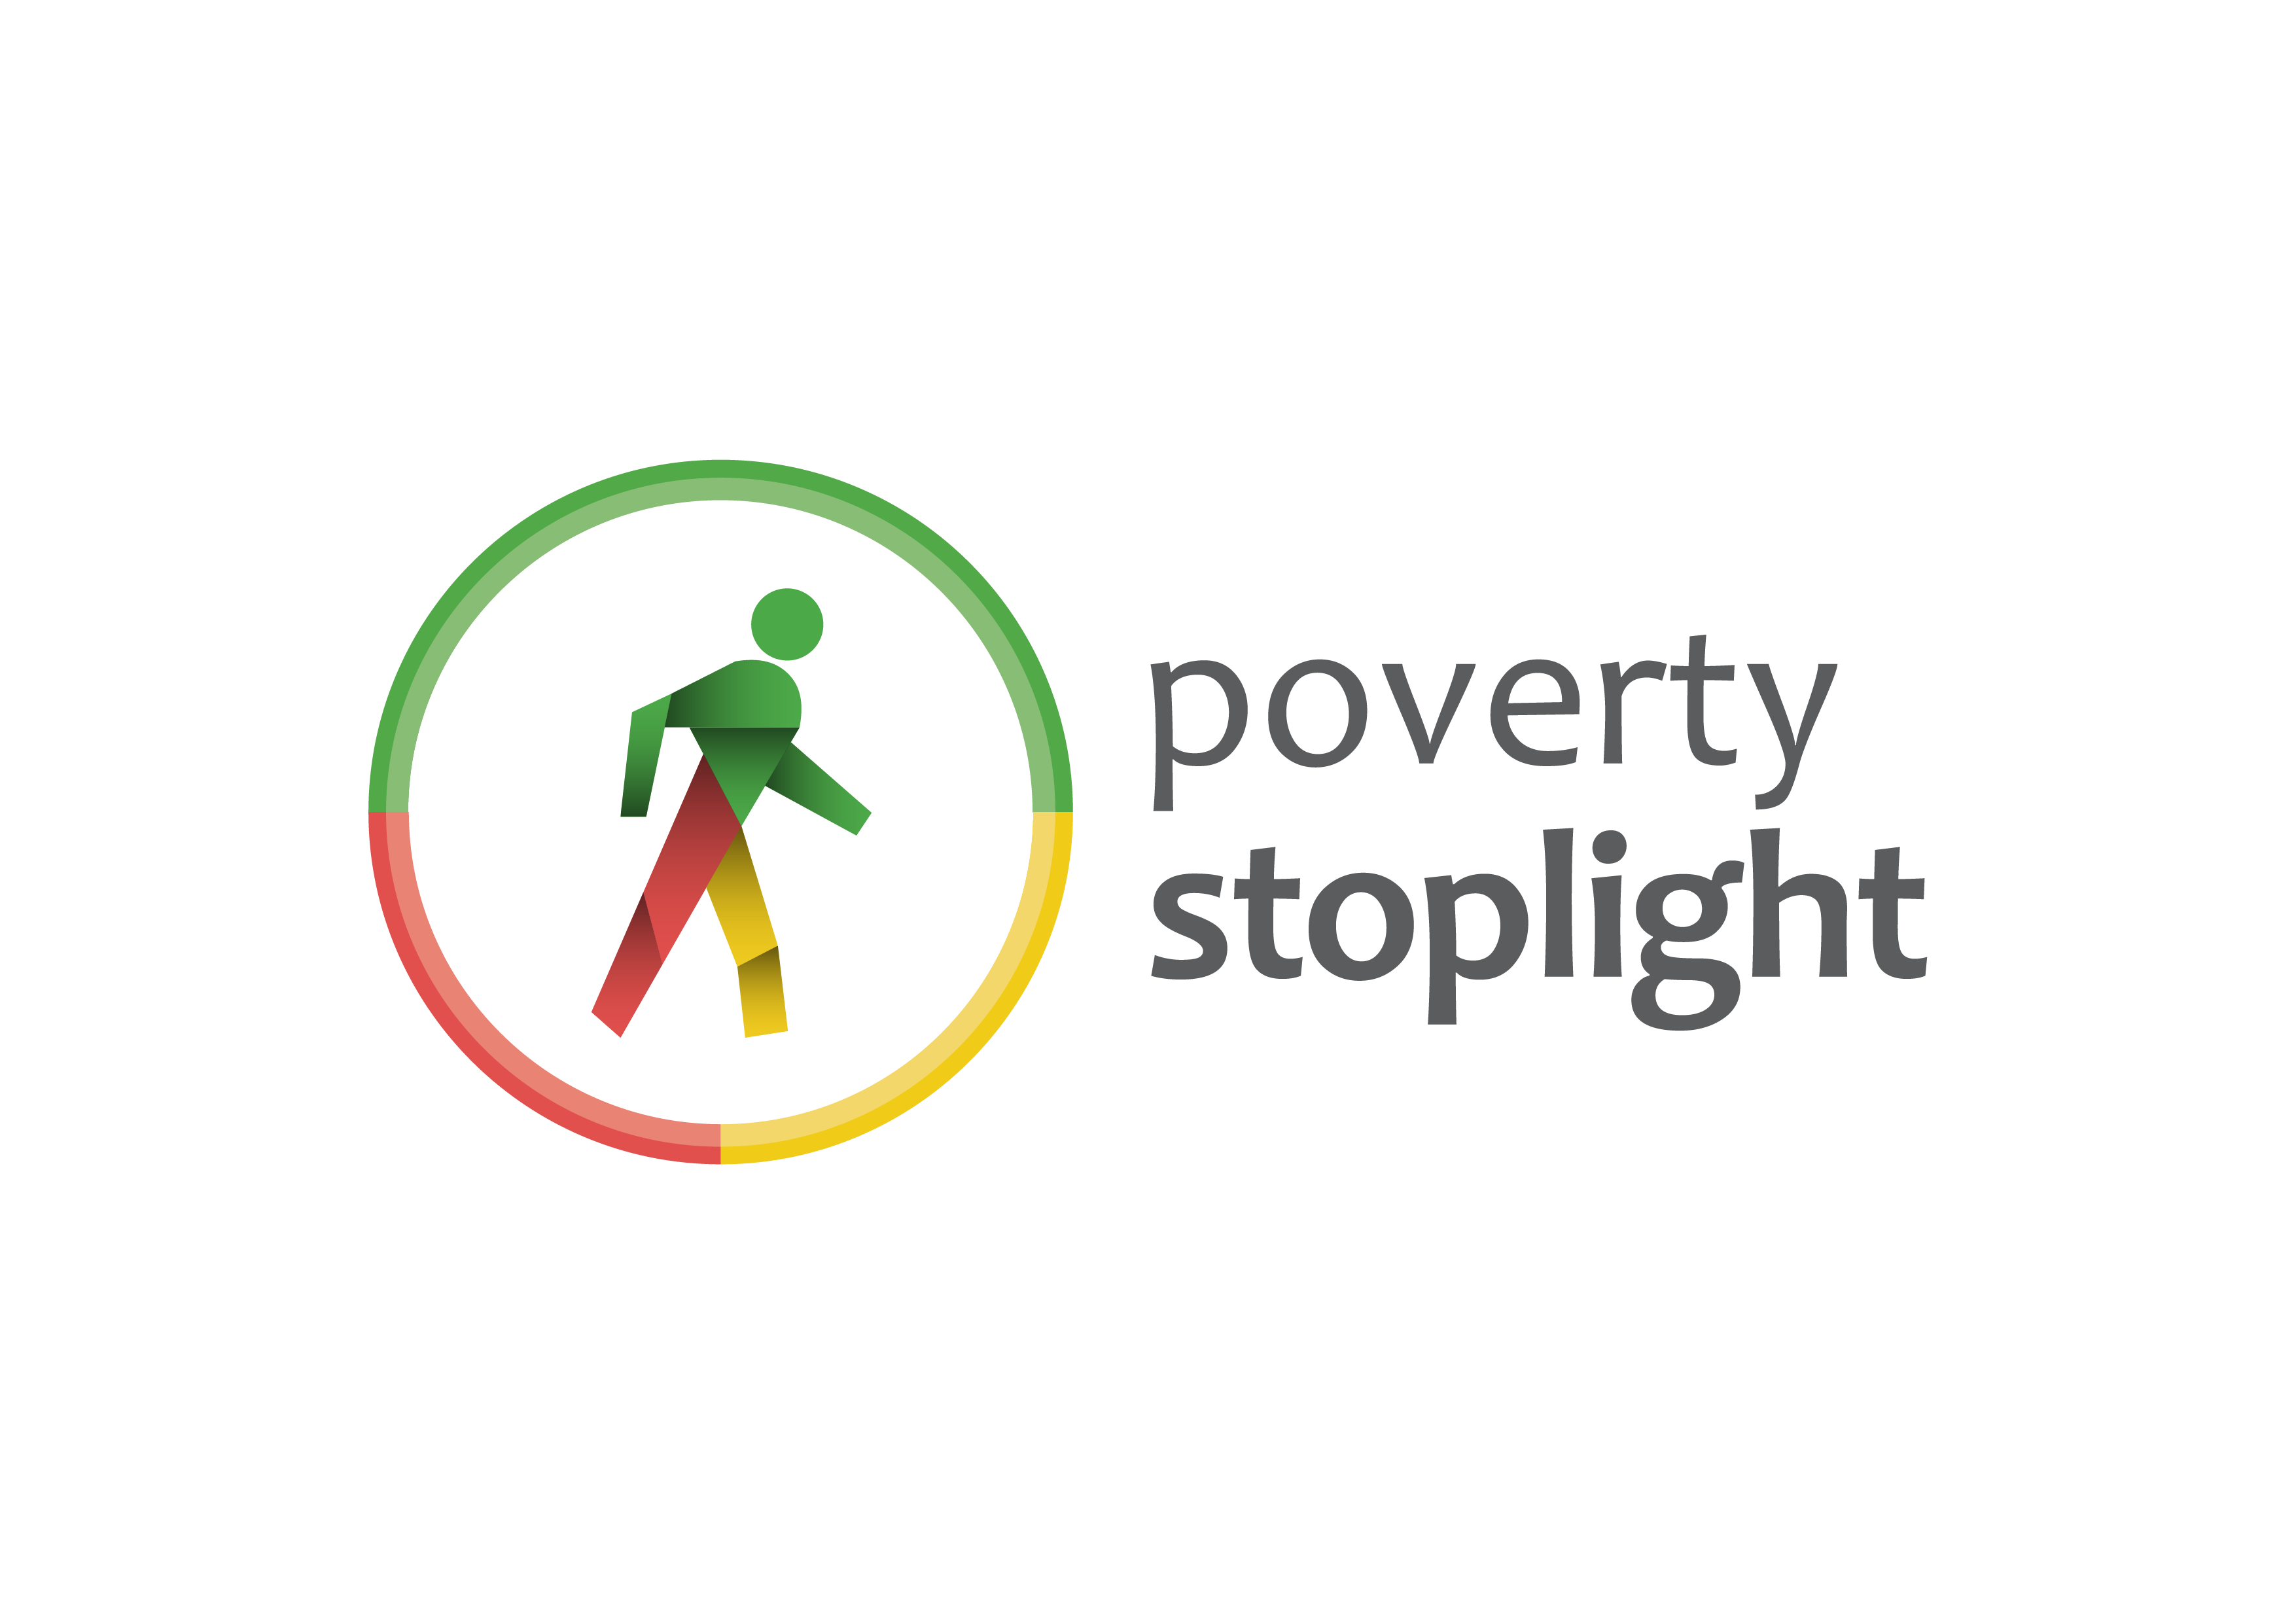 poverty spotlight